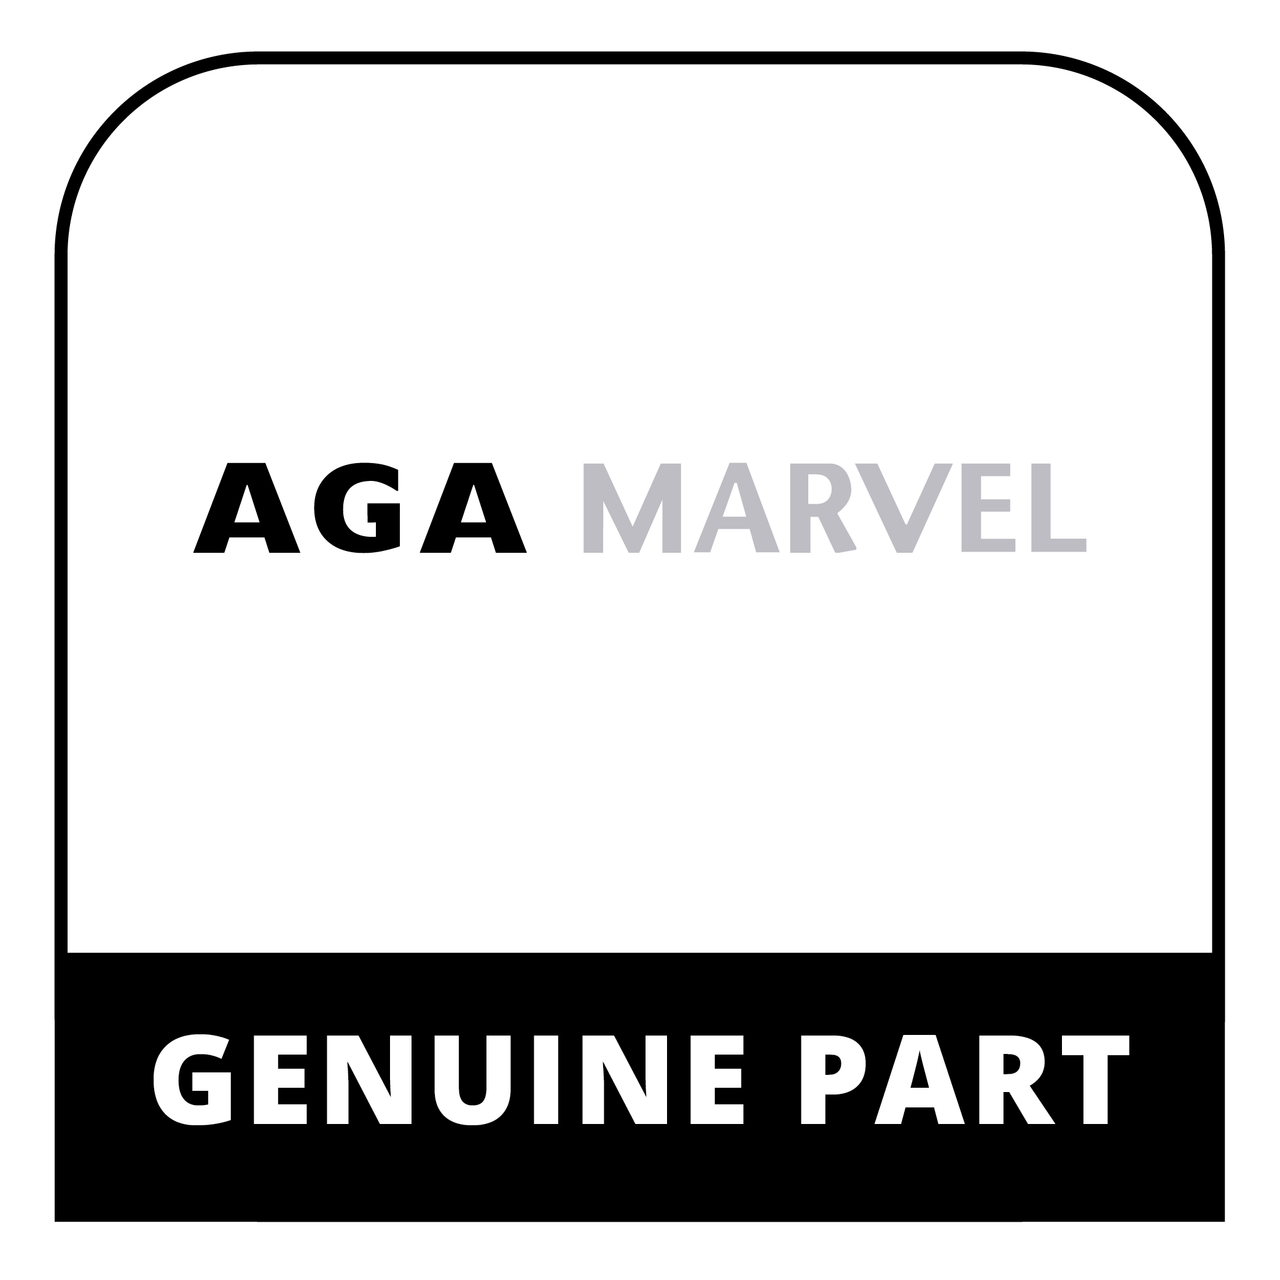 AGA Marvel R5304 - Wiring/Data Label 400G Pf - Genuine AGA Marvel Part